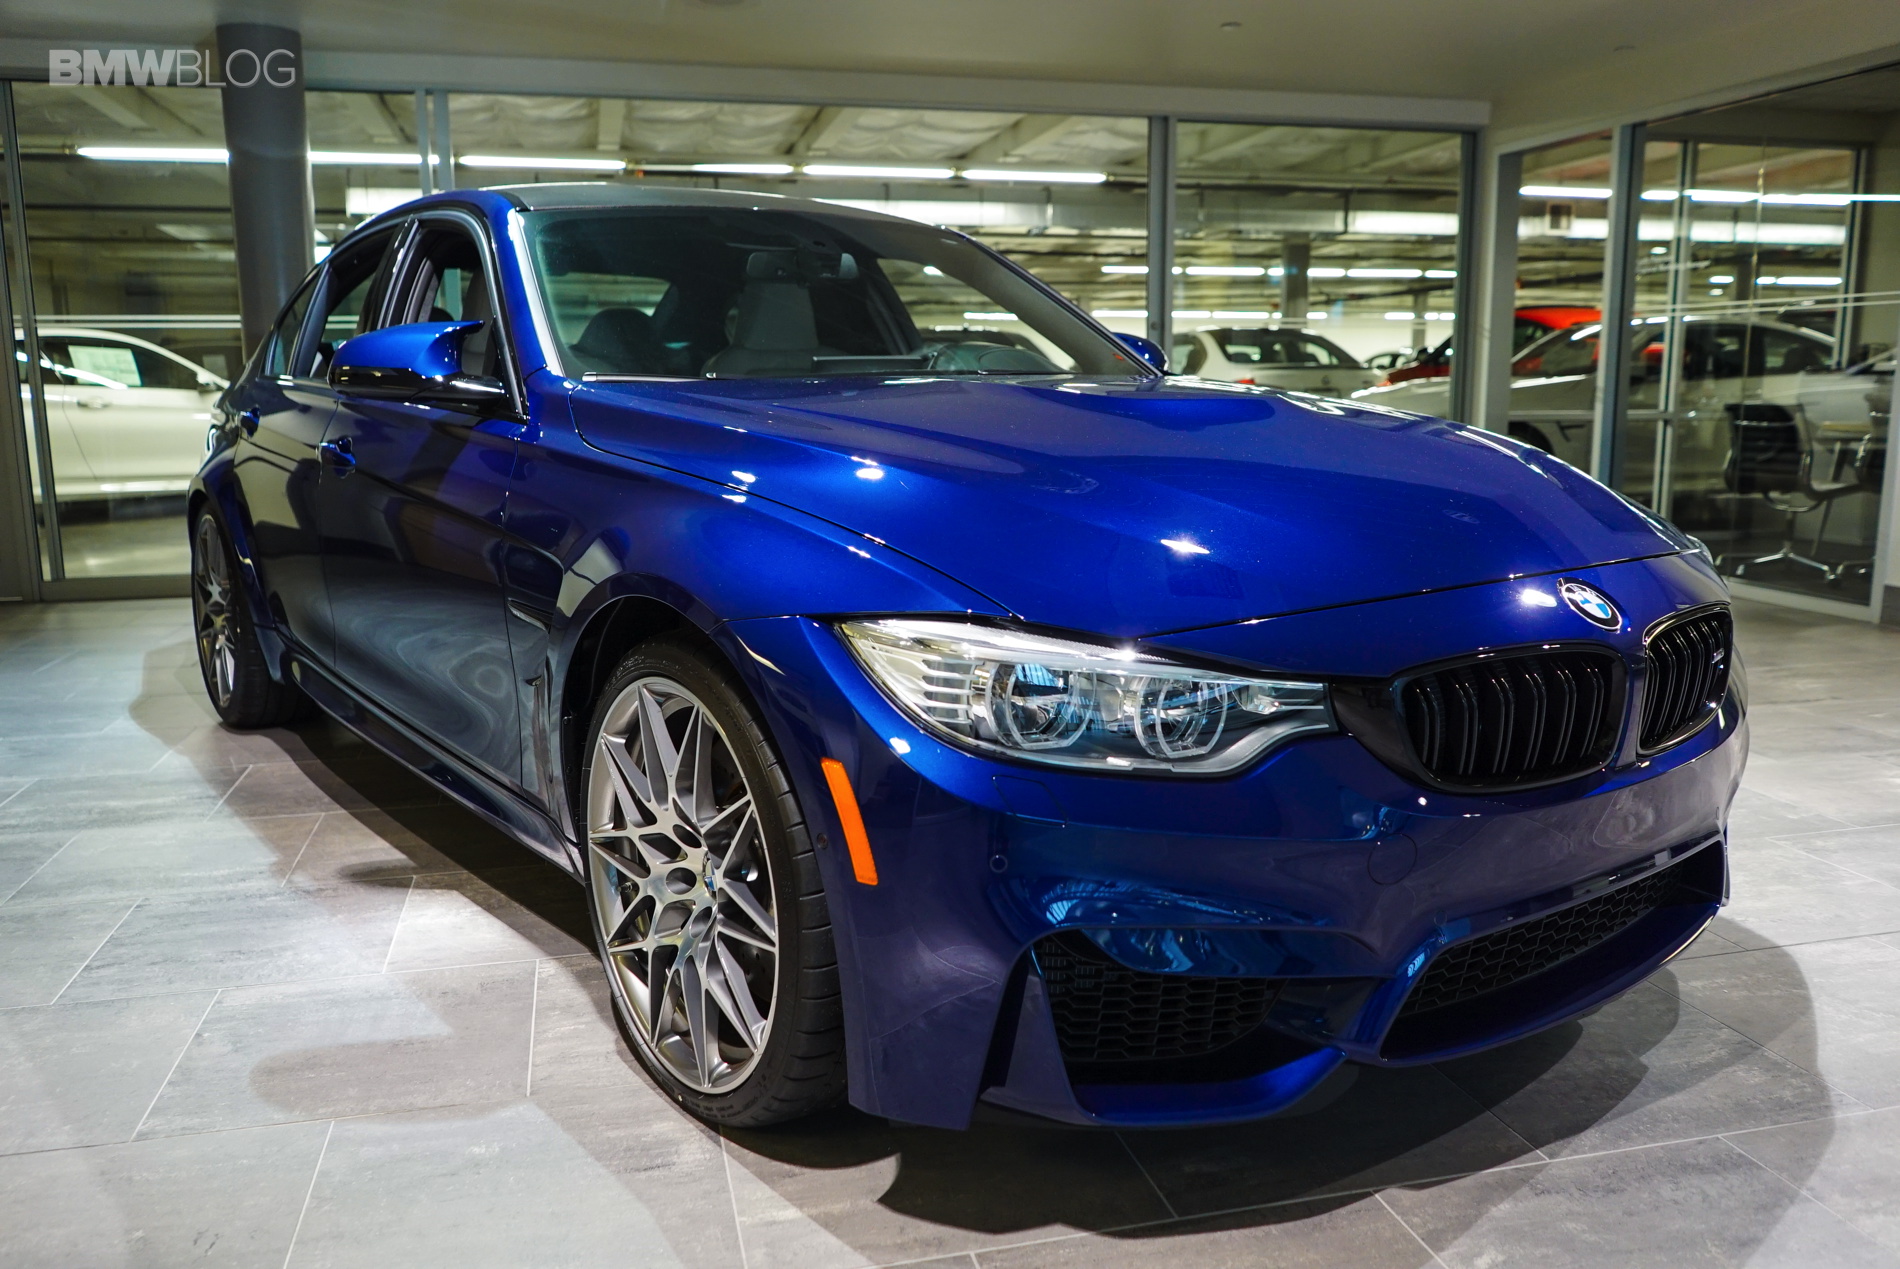 Meet blue. Blue-Hera-Mica-Metallic-BMW-m3. BMW m5 ультрамарин. БМВ 530i синий танзанит. БМВ 530i синяя.